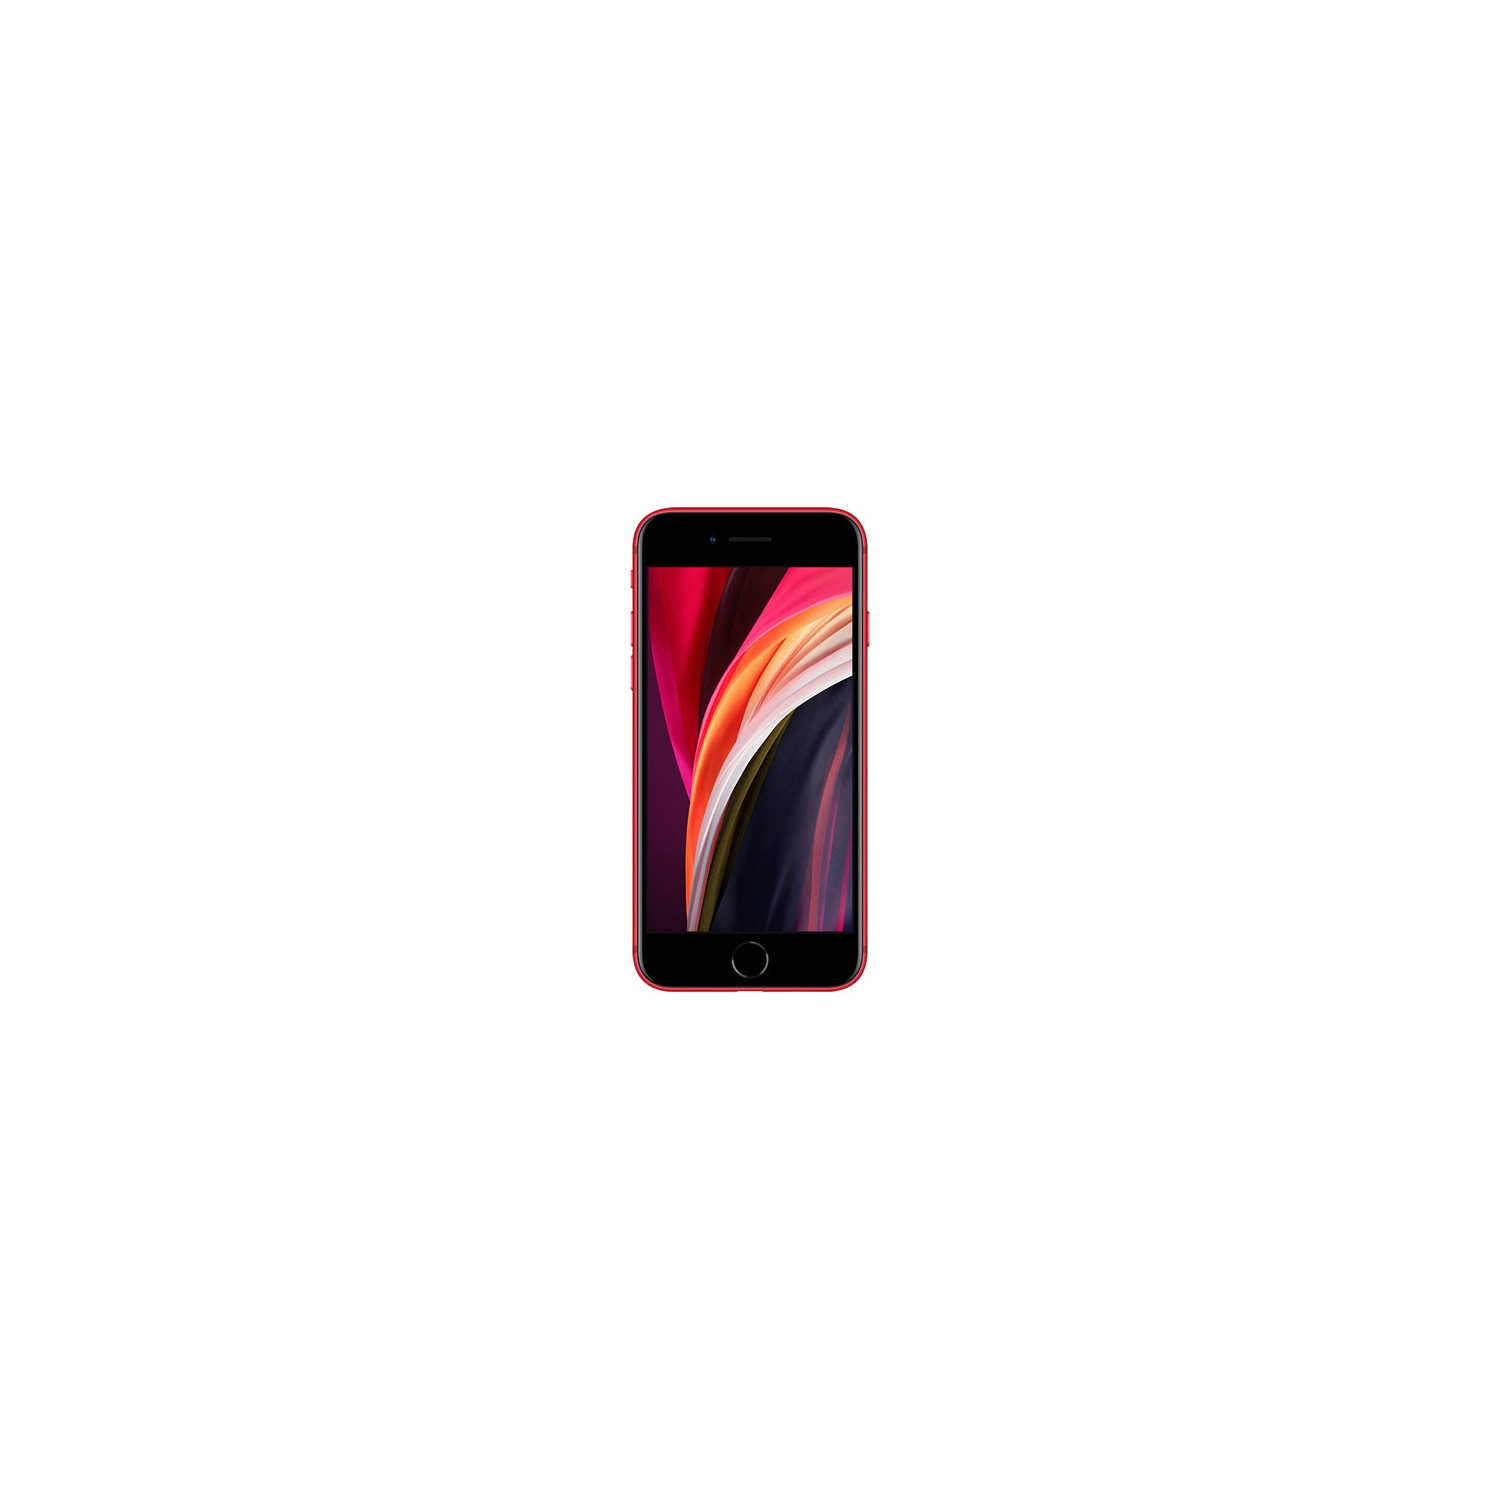 Apple iPhone SE (2nd generation) 64GB Smartphone - Red - Unlocked 